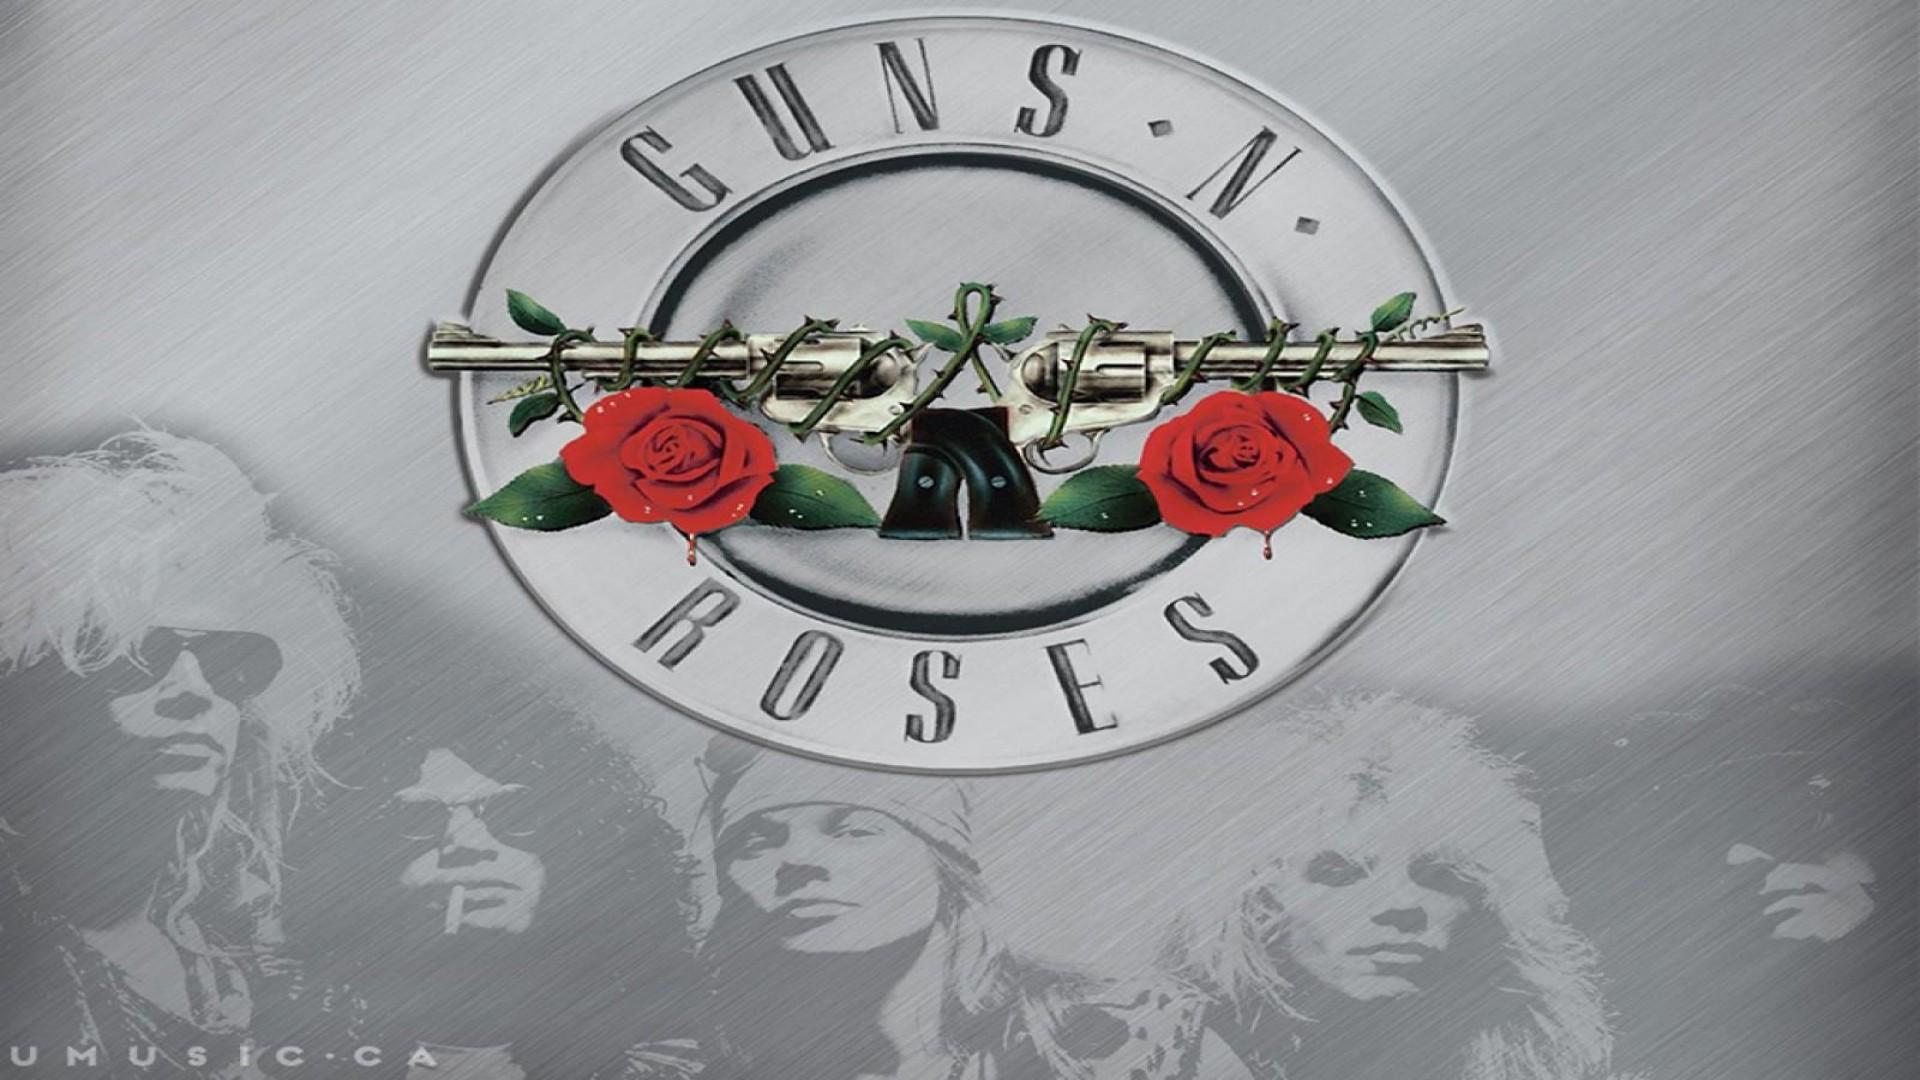 Guns N' Roses: Use Your Illusion I